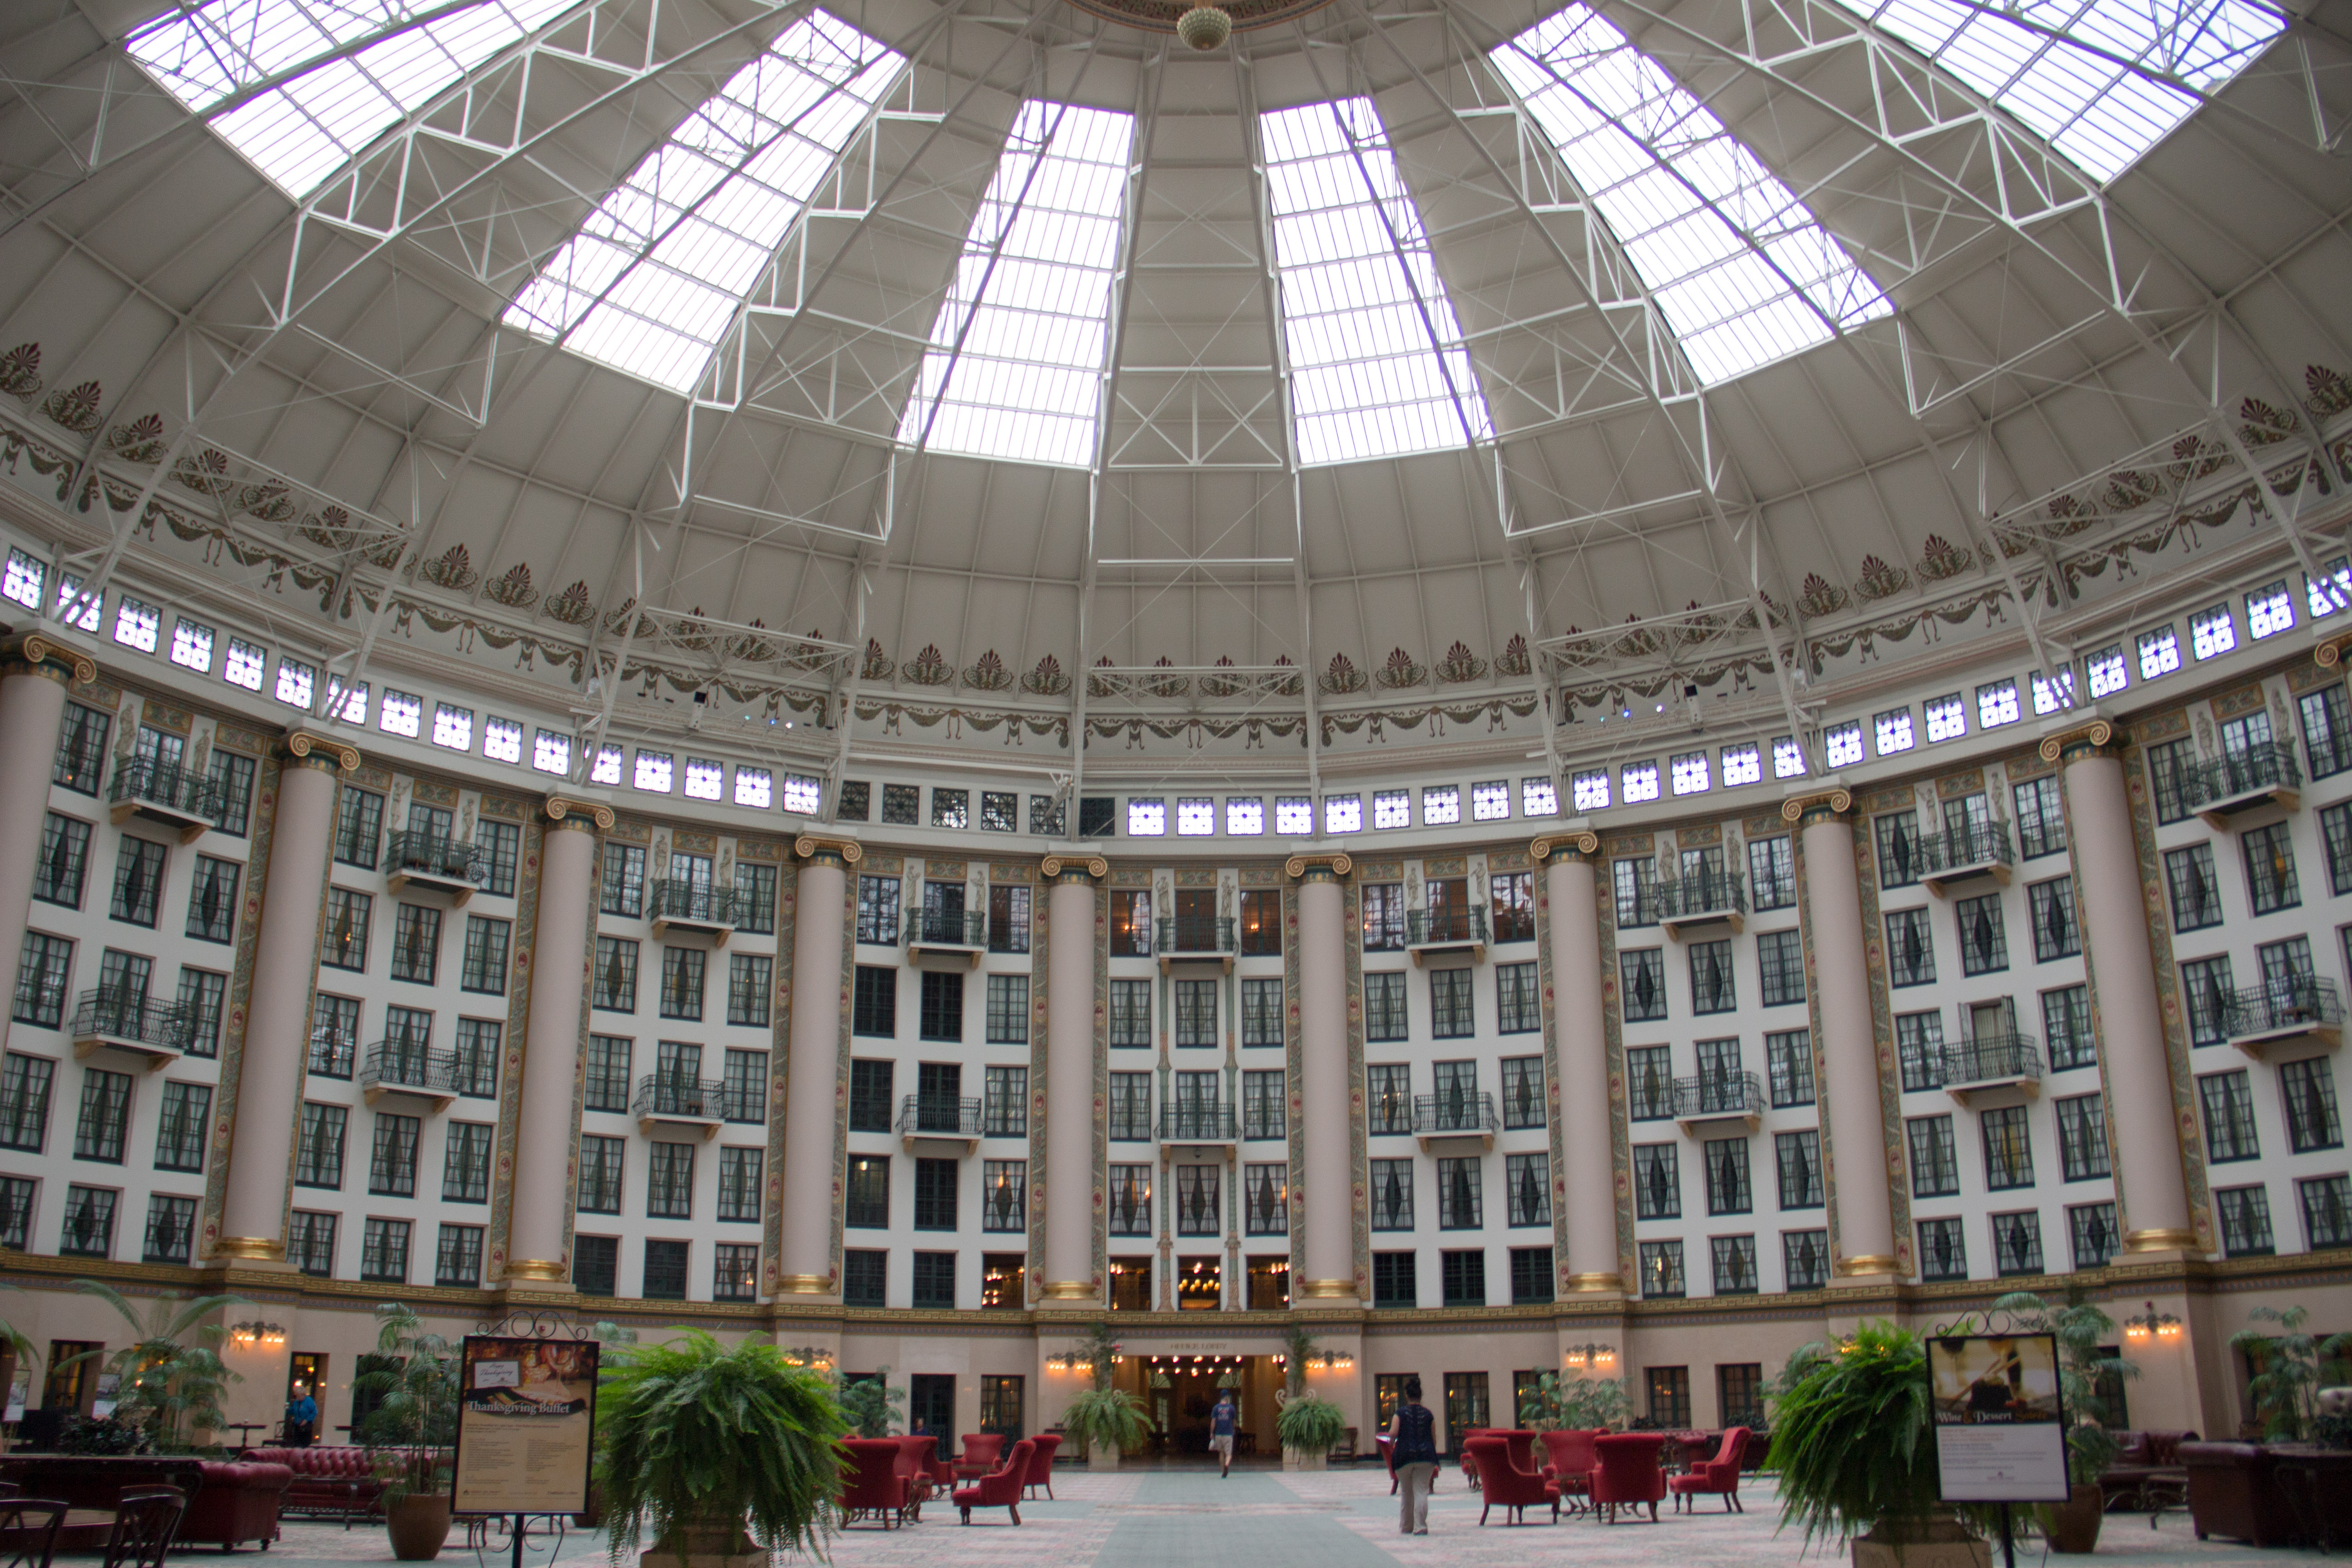 West Baden Hotel atrium